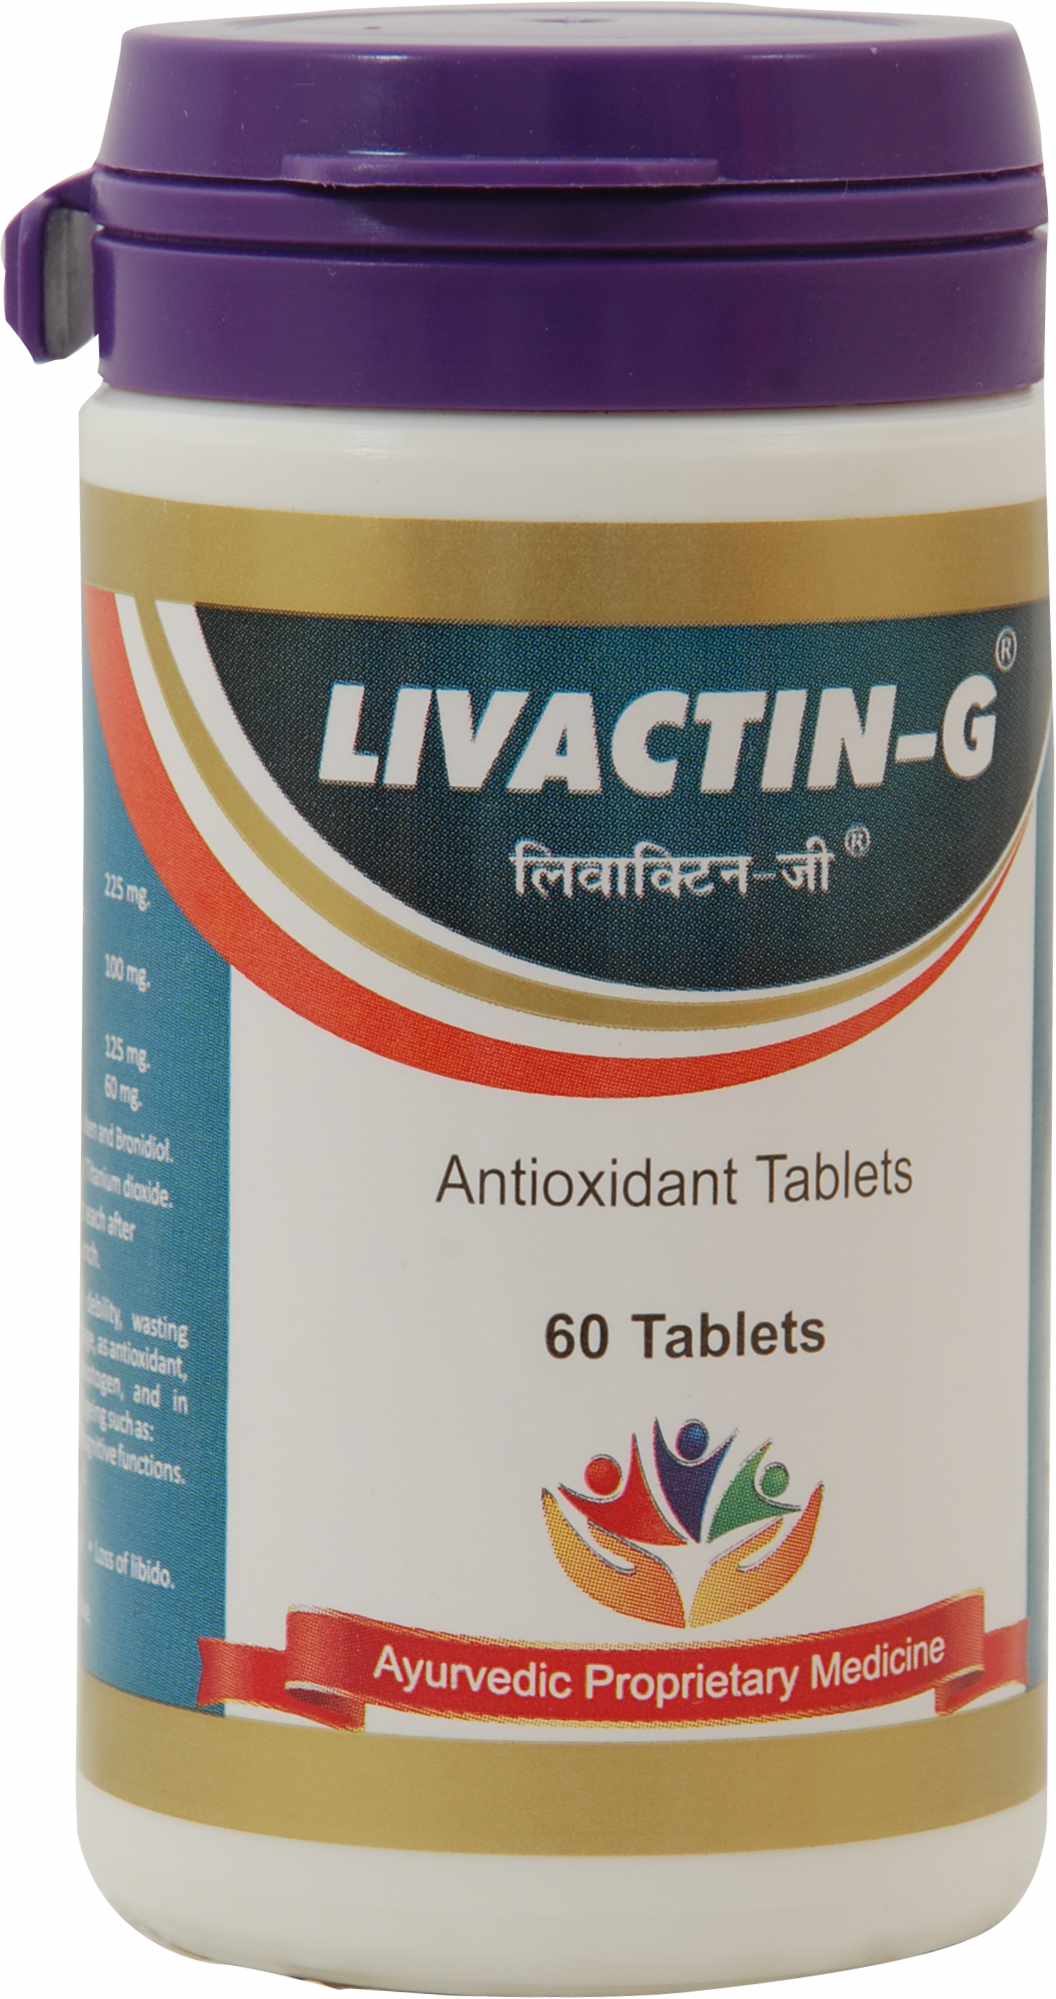 Buy J & J Dechane Livactin-G Anti-Oxidant Tablets at Best Price Online